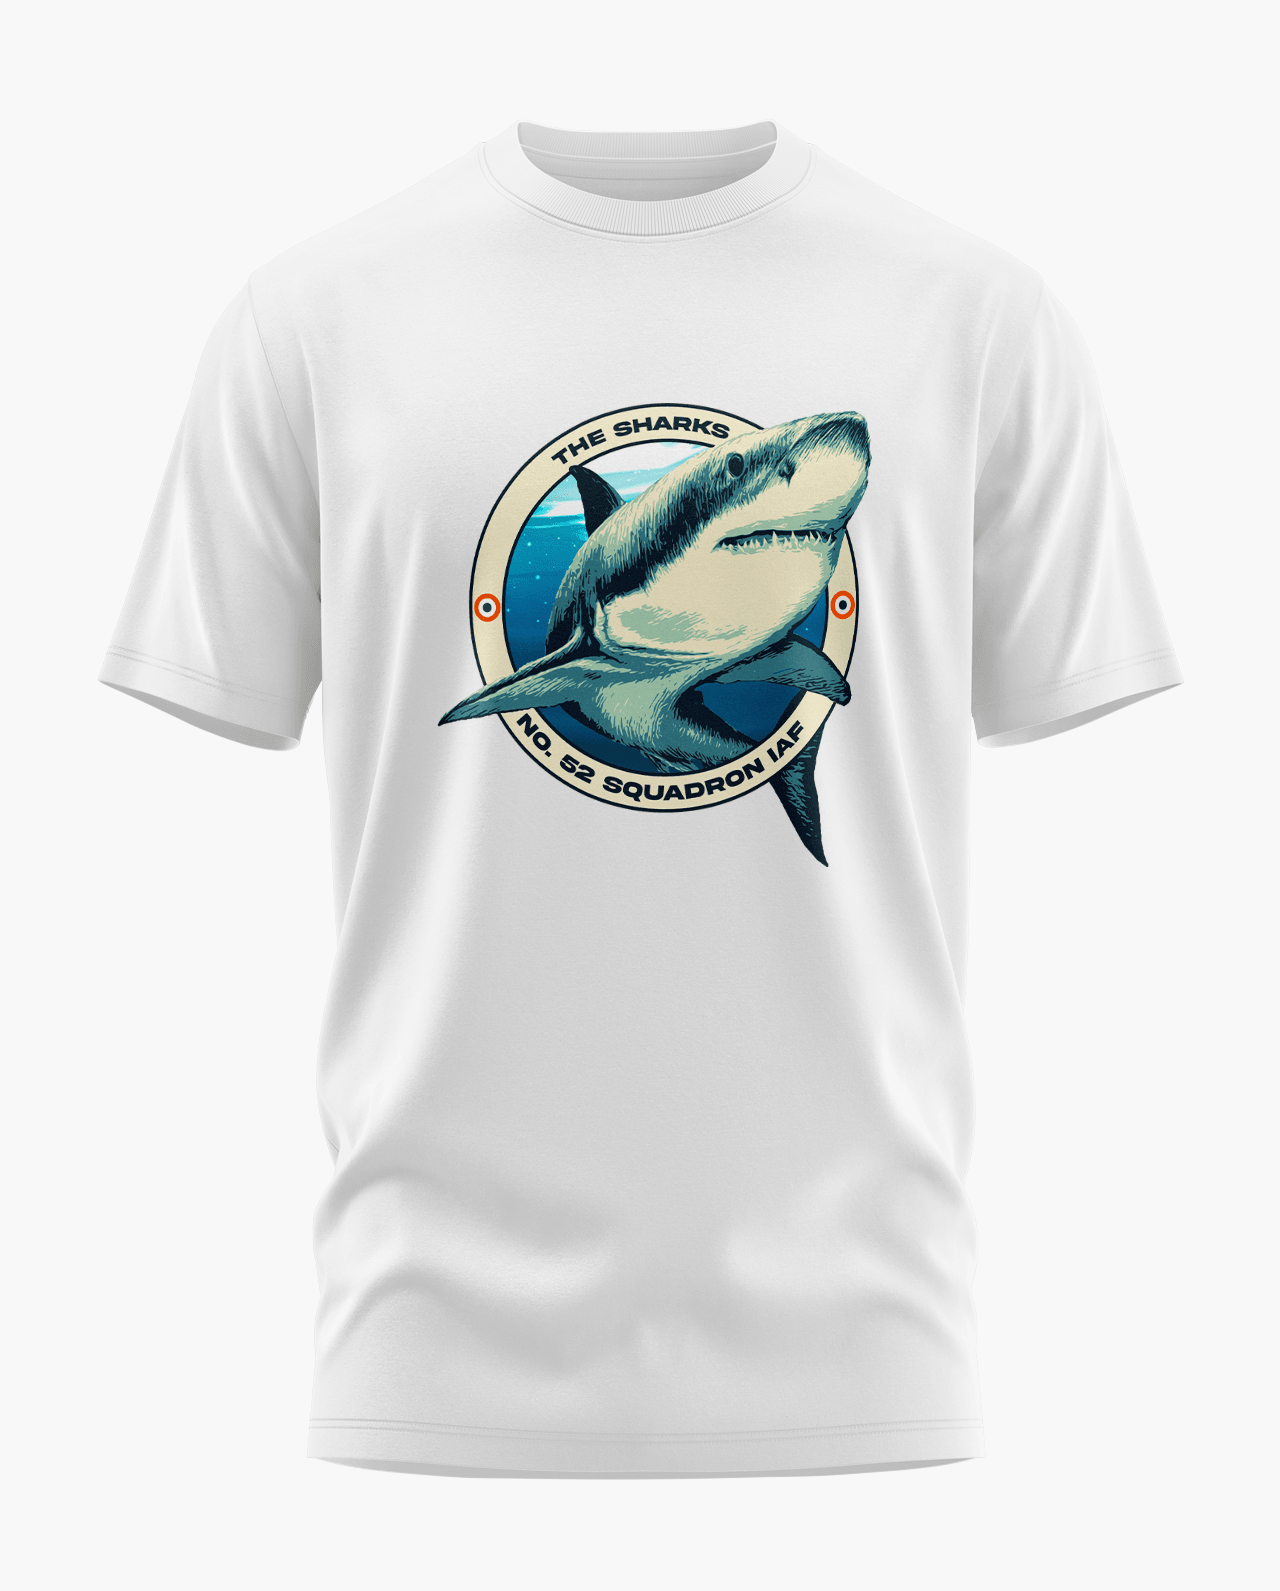 The Sharks T-Shirt - Aero Armour